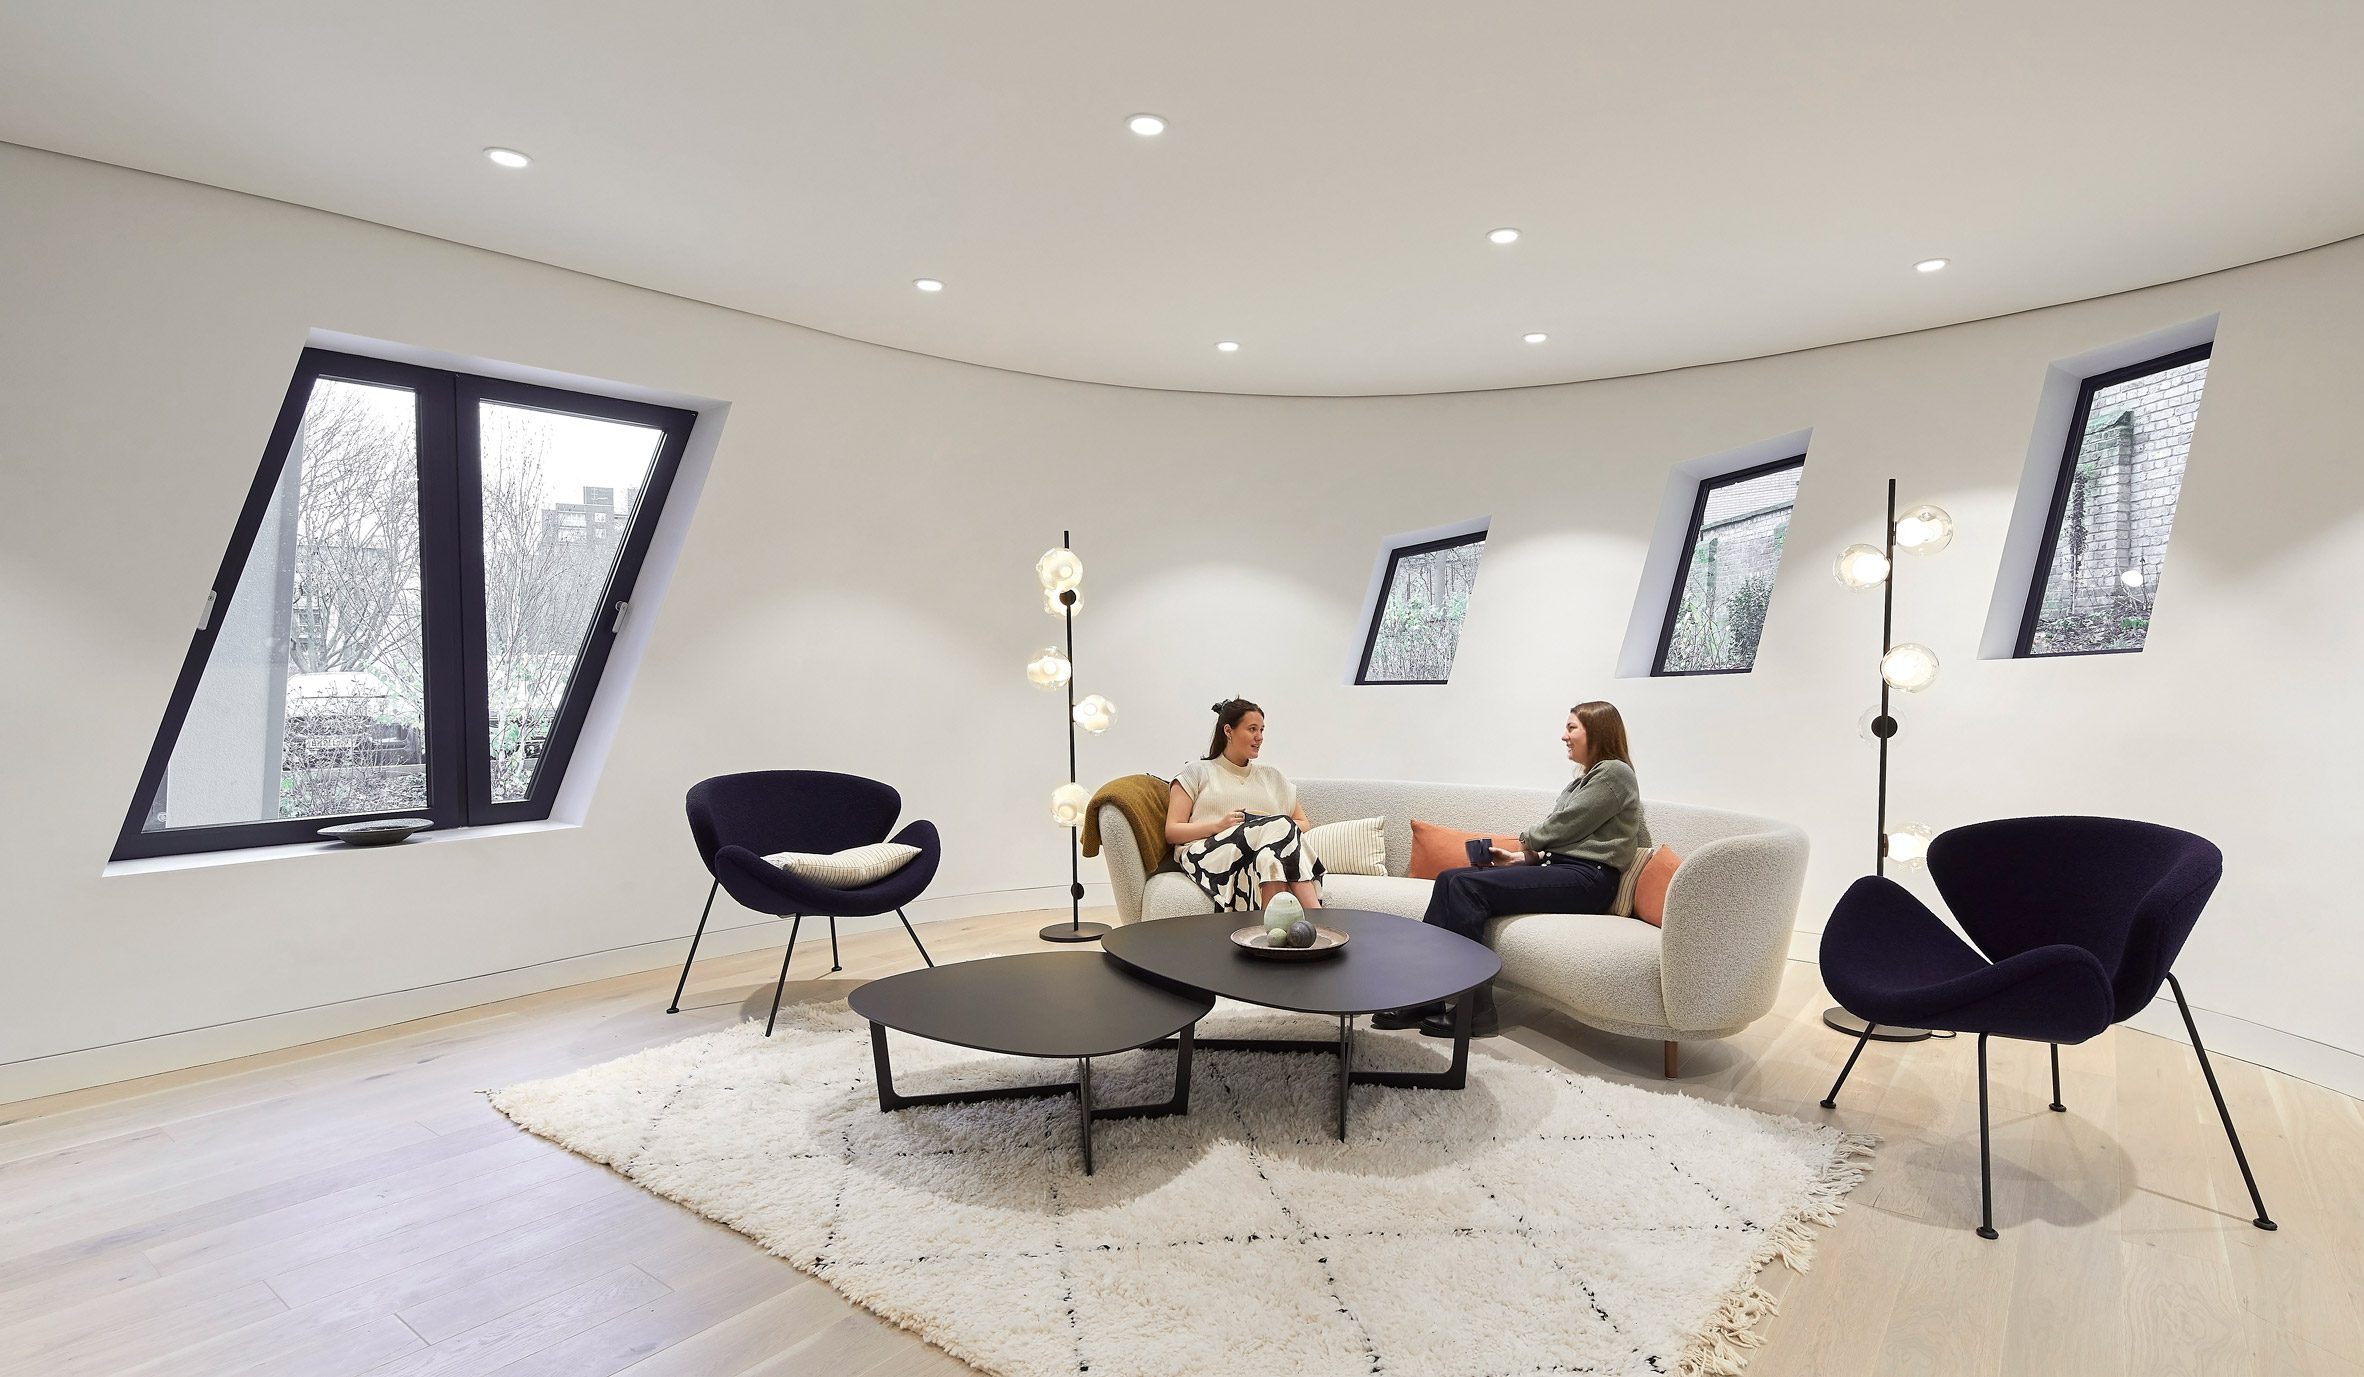 Lounge area with geometric windows by Studio Libeskind